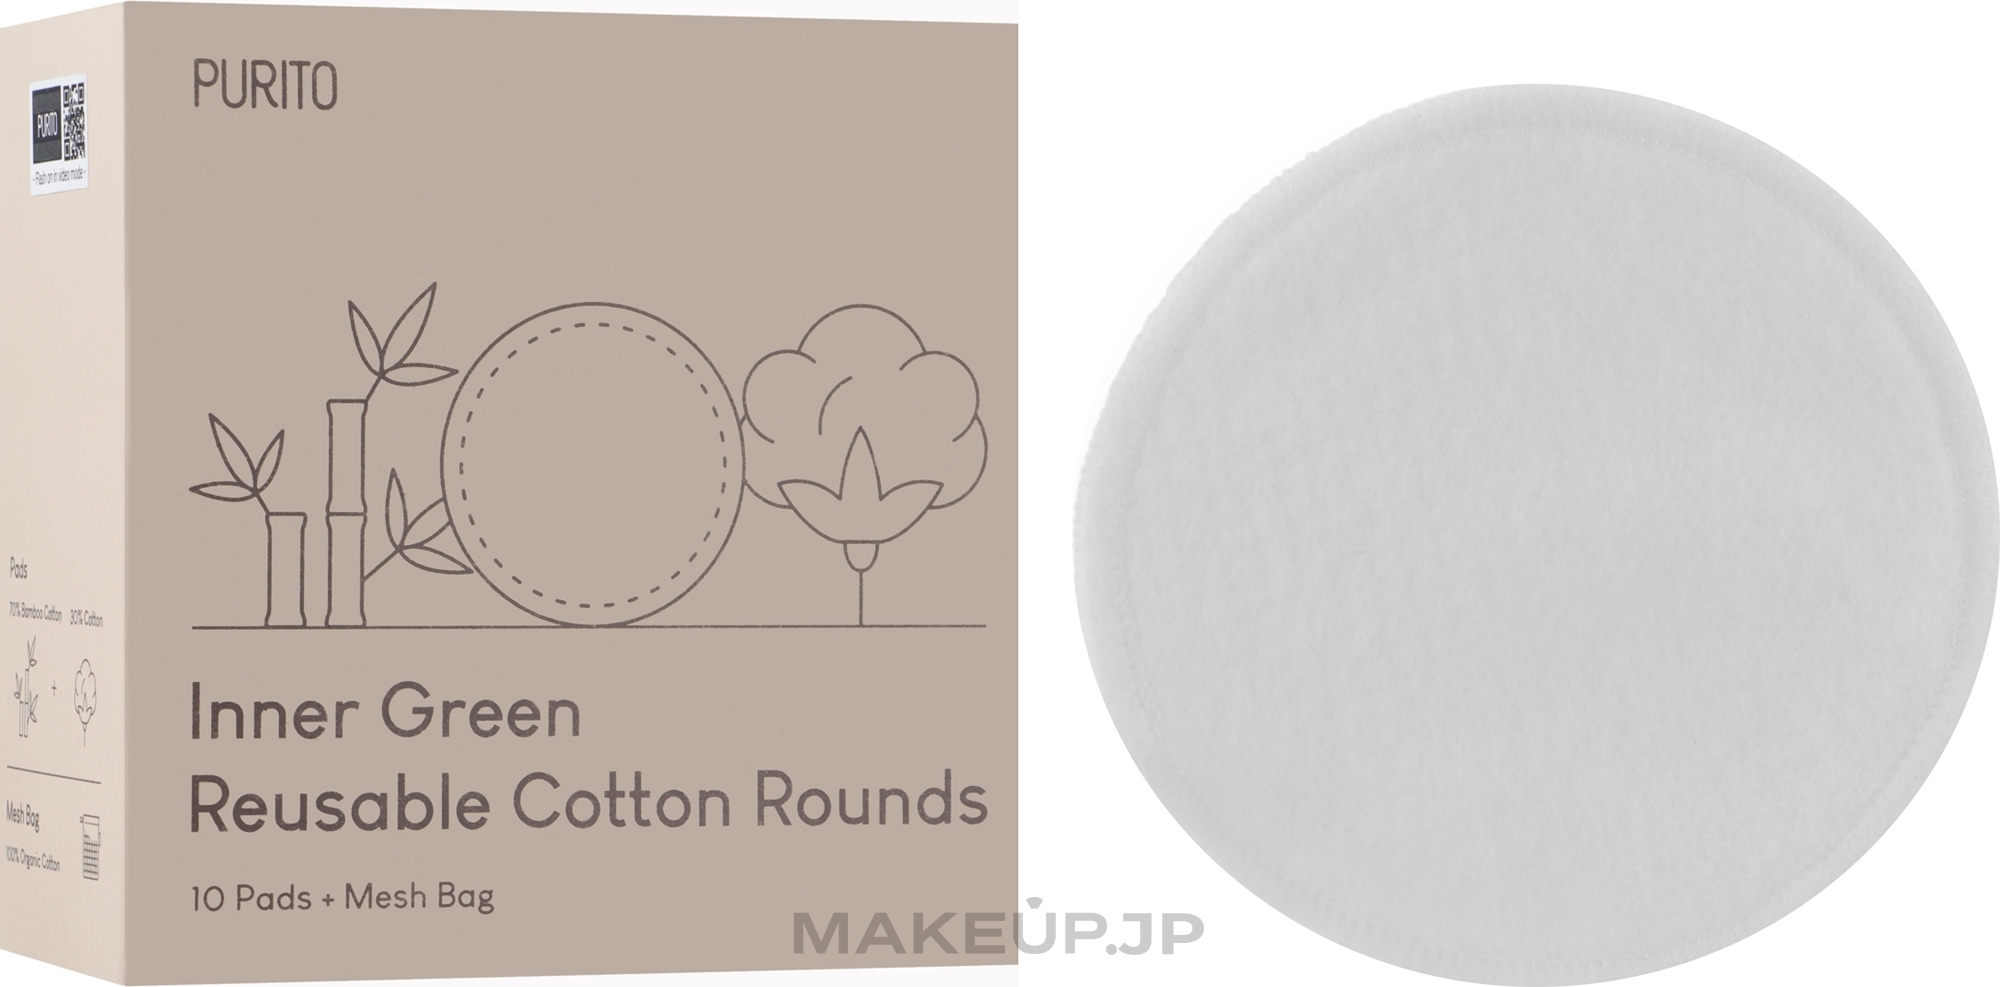 Reusable Cotton Pads - Purito Inner Green Reusable Cotton Rounds — photo 10 szt.